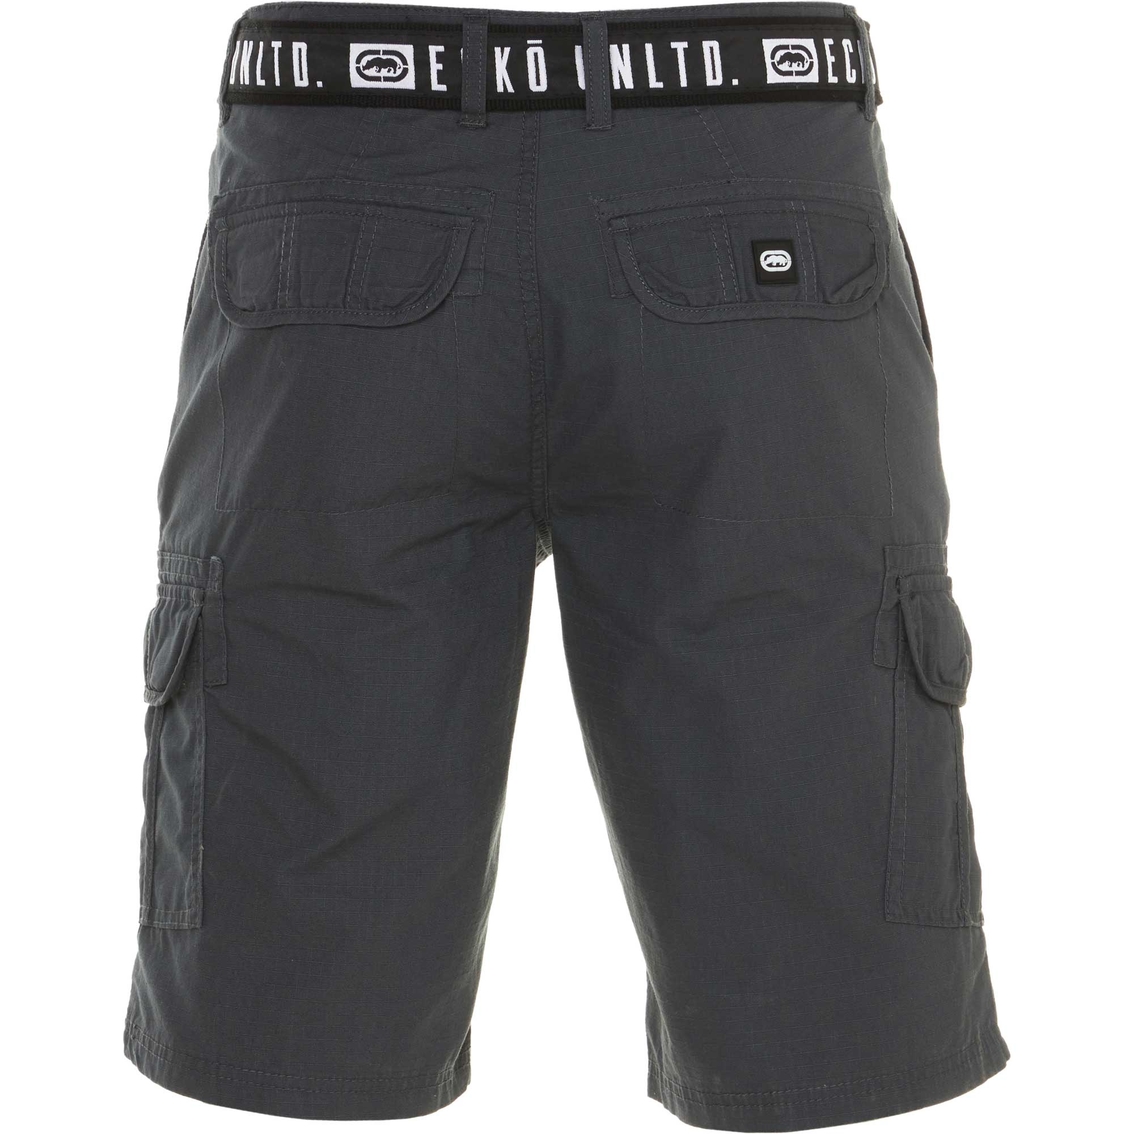 Ecko Unltd Belted Gripper Cargo Shorts | Shorts | Clothing ...